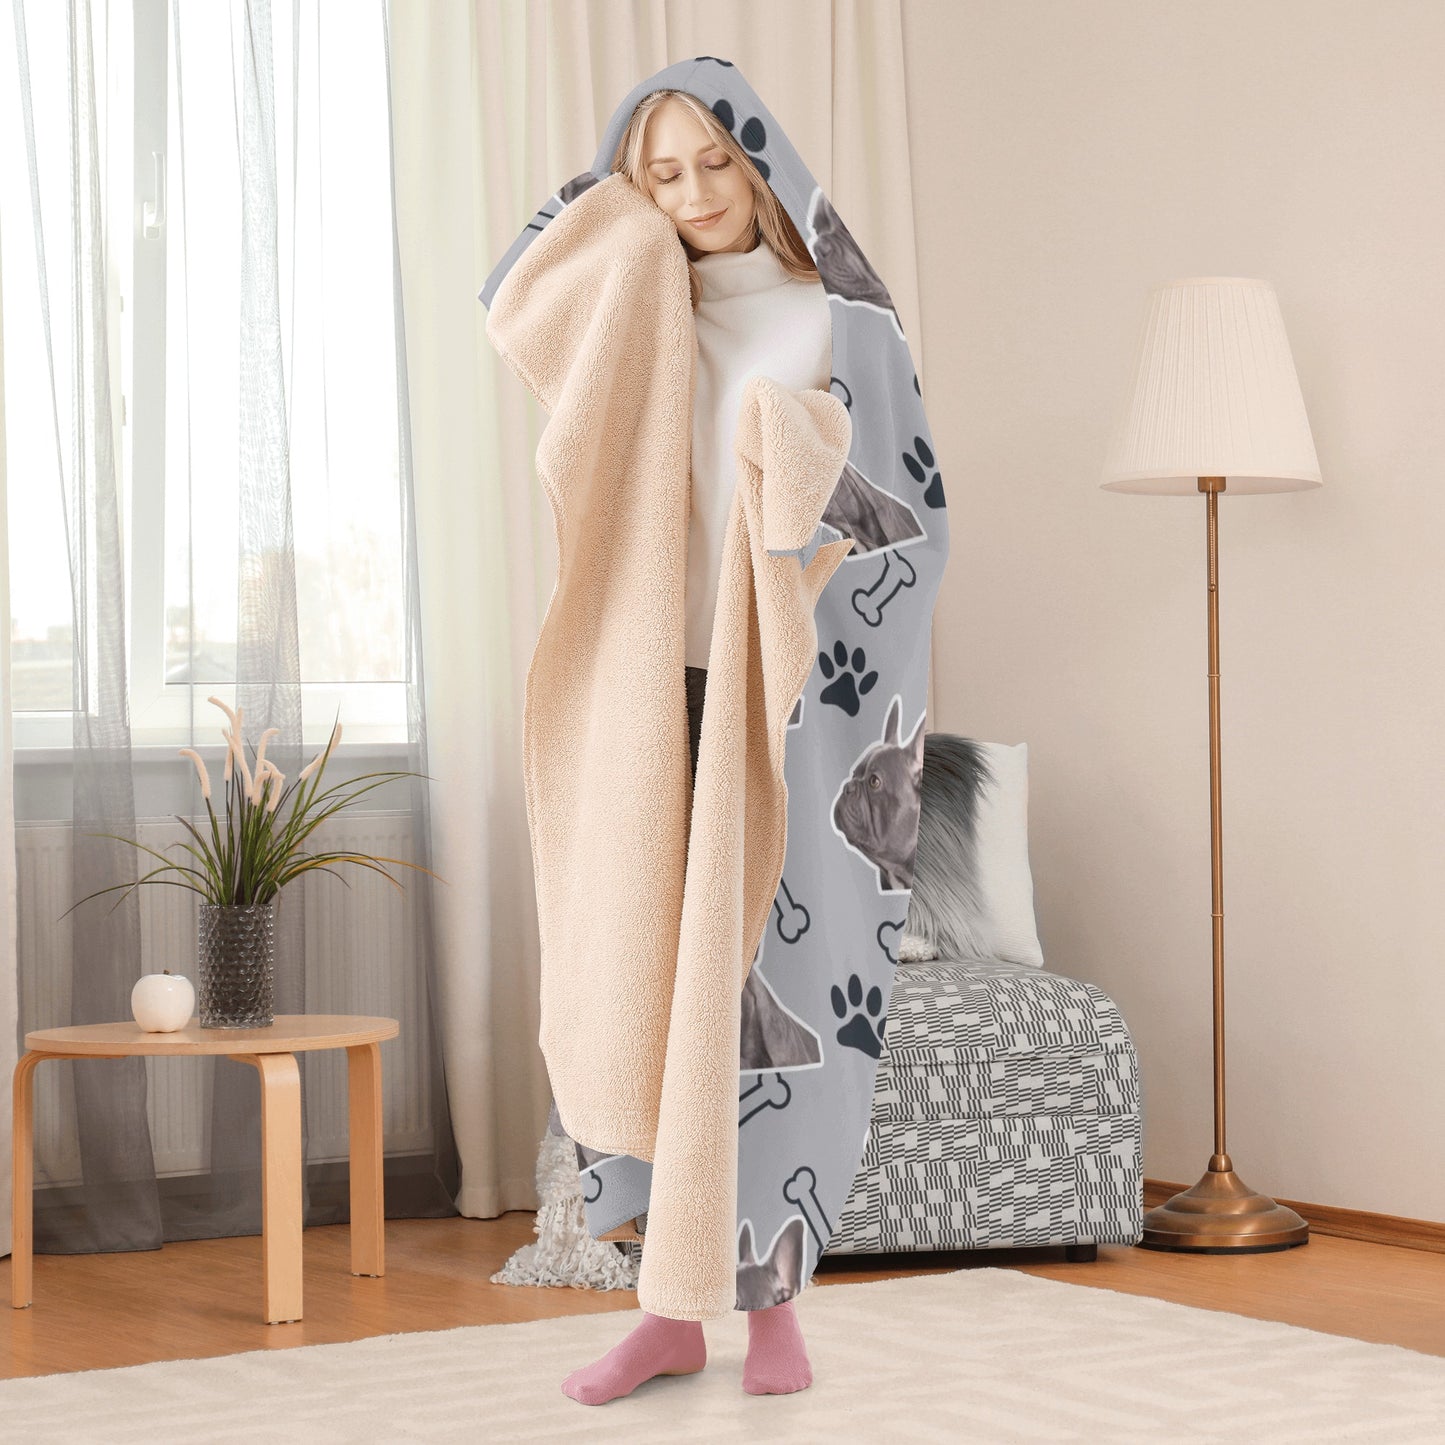 Custom Hooded Blanket with Frenchie's Image  - Hooded Blanket